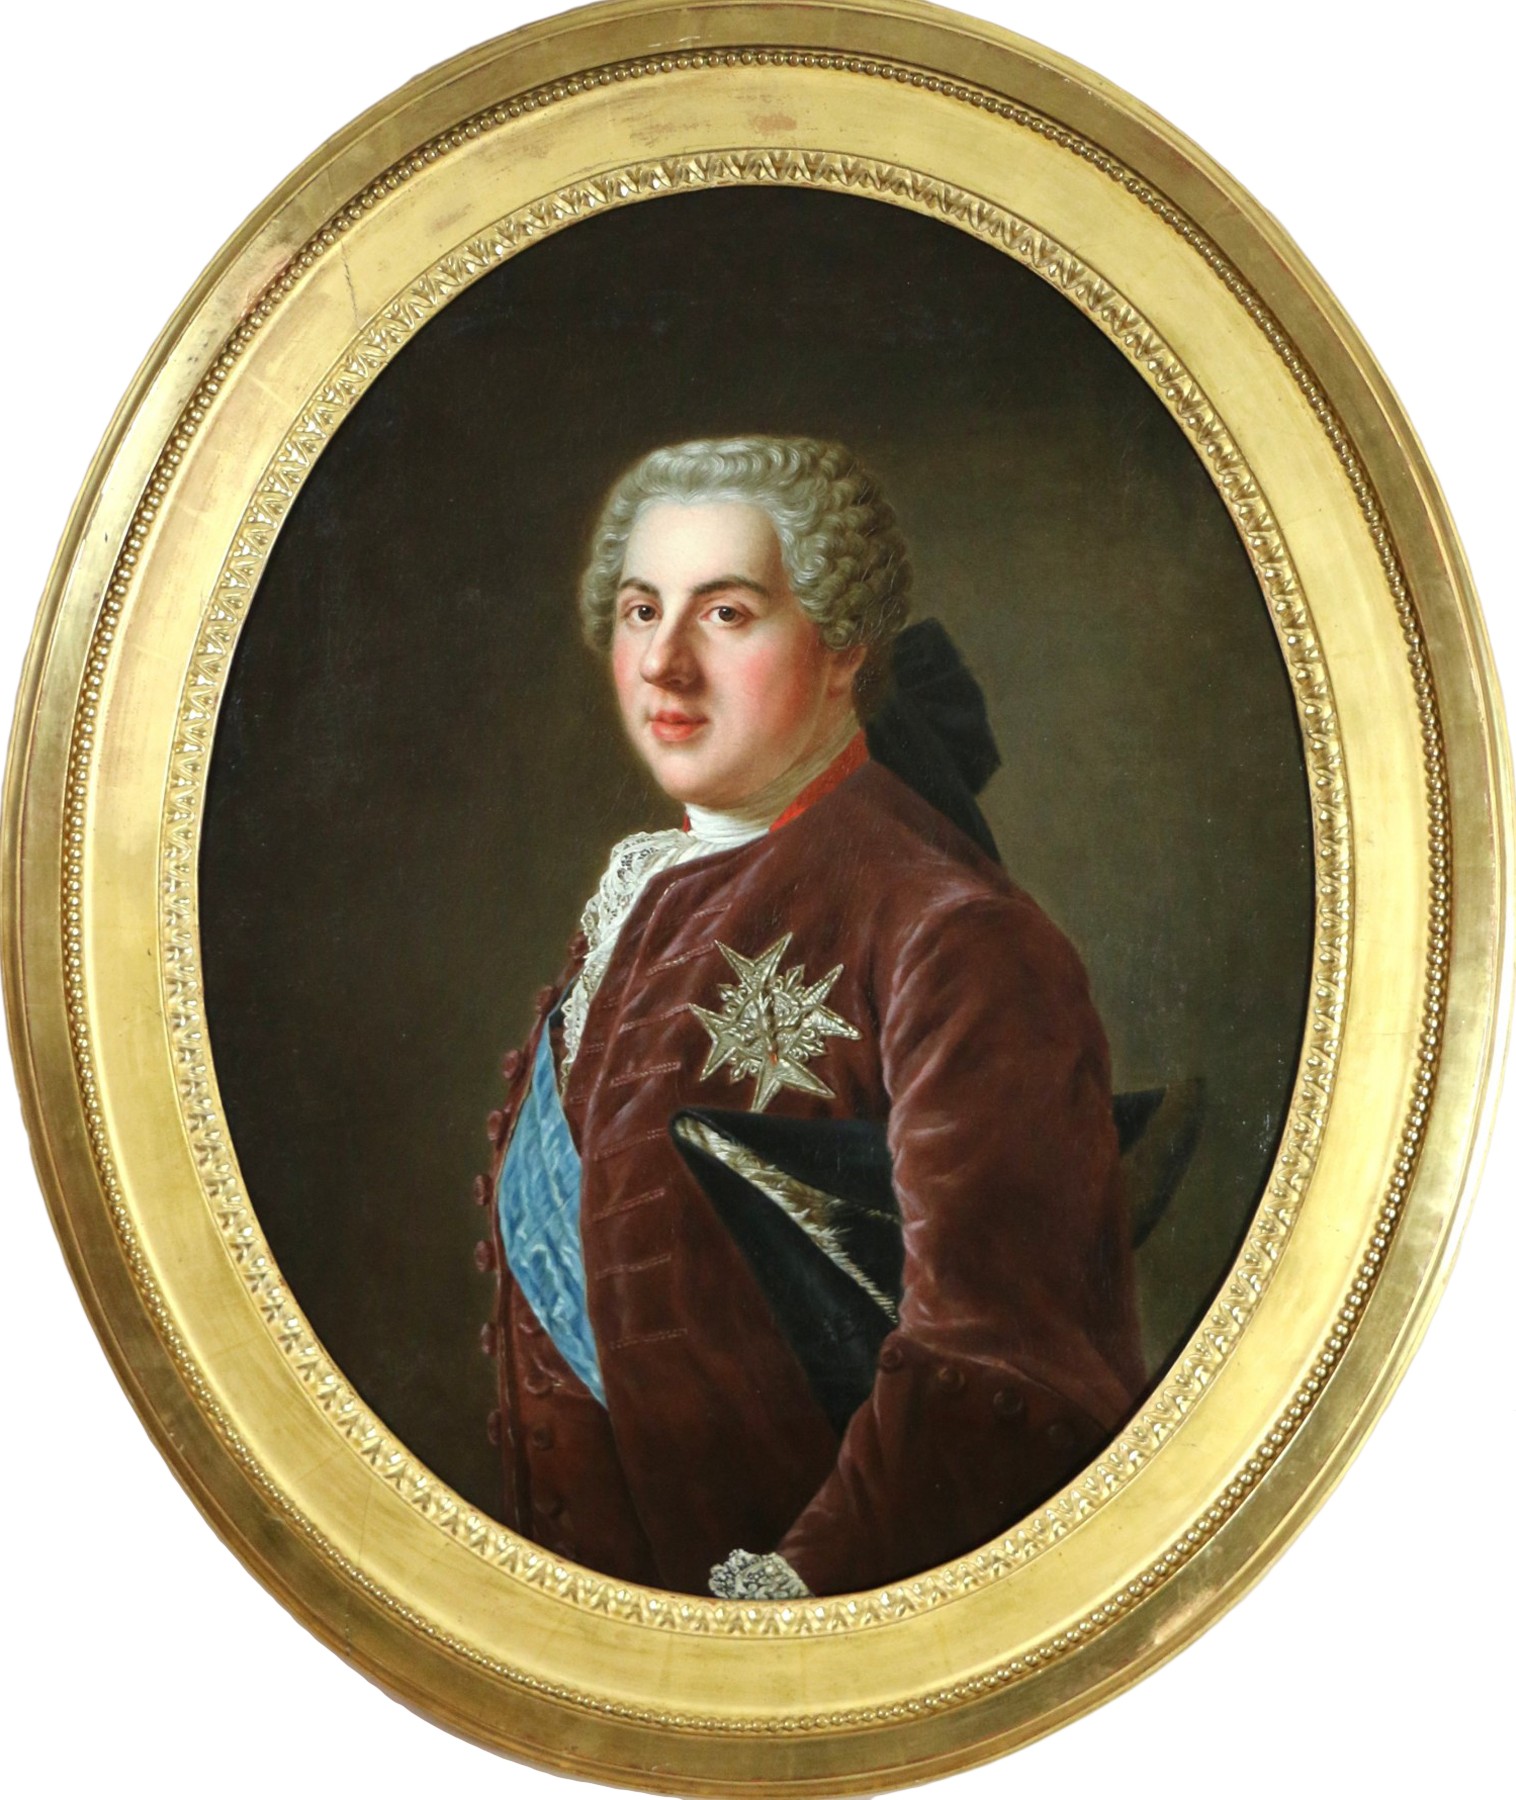 ouis Ferdinand de France (1729 - 1765), Dauphin of France, son of Louis XV  - Ref.92427